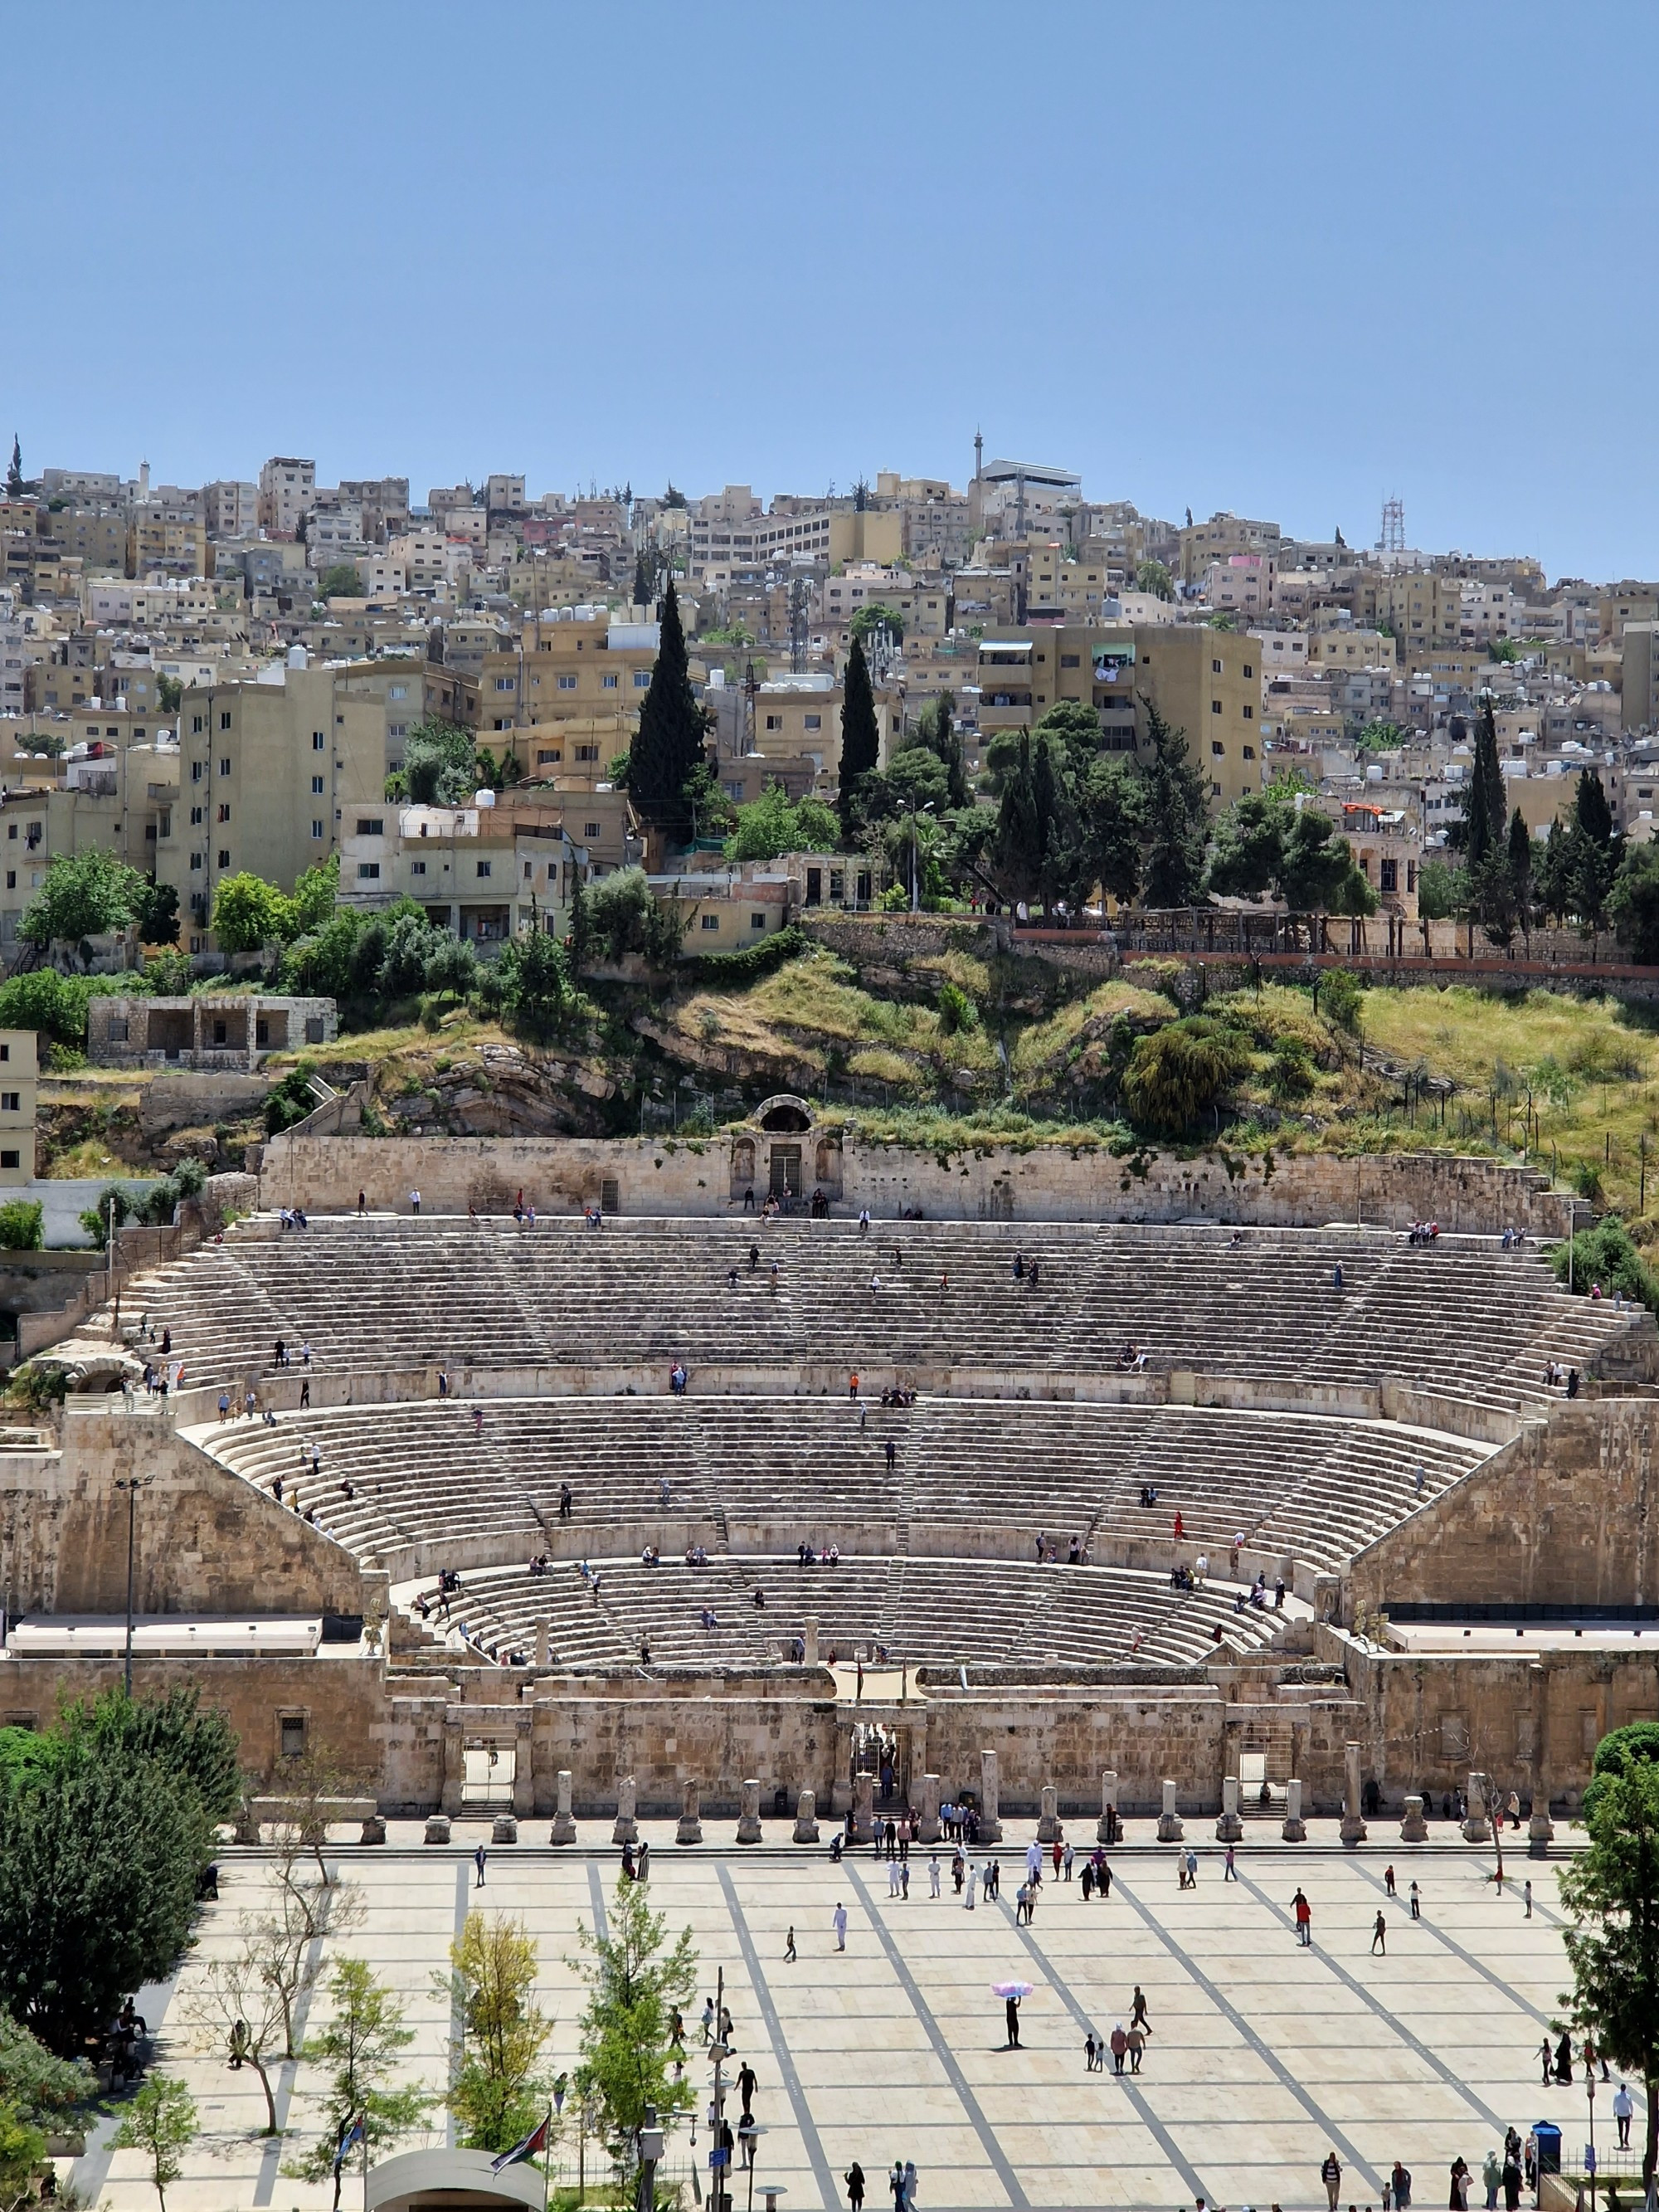 Amman<br/>
Roman Theatre